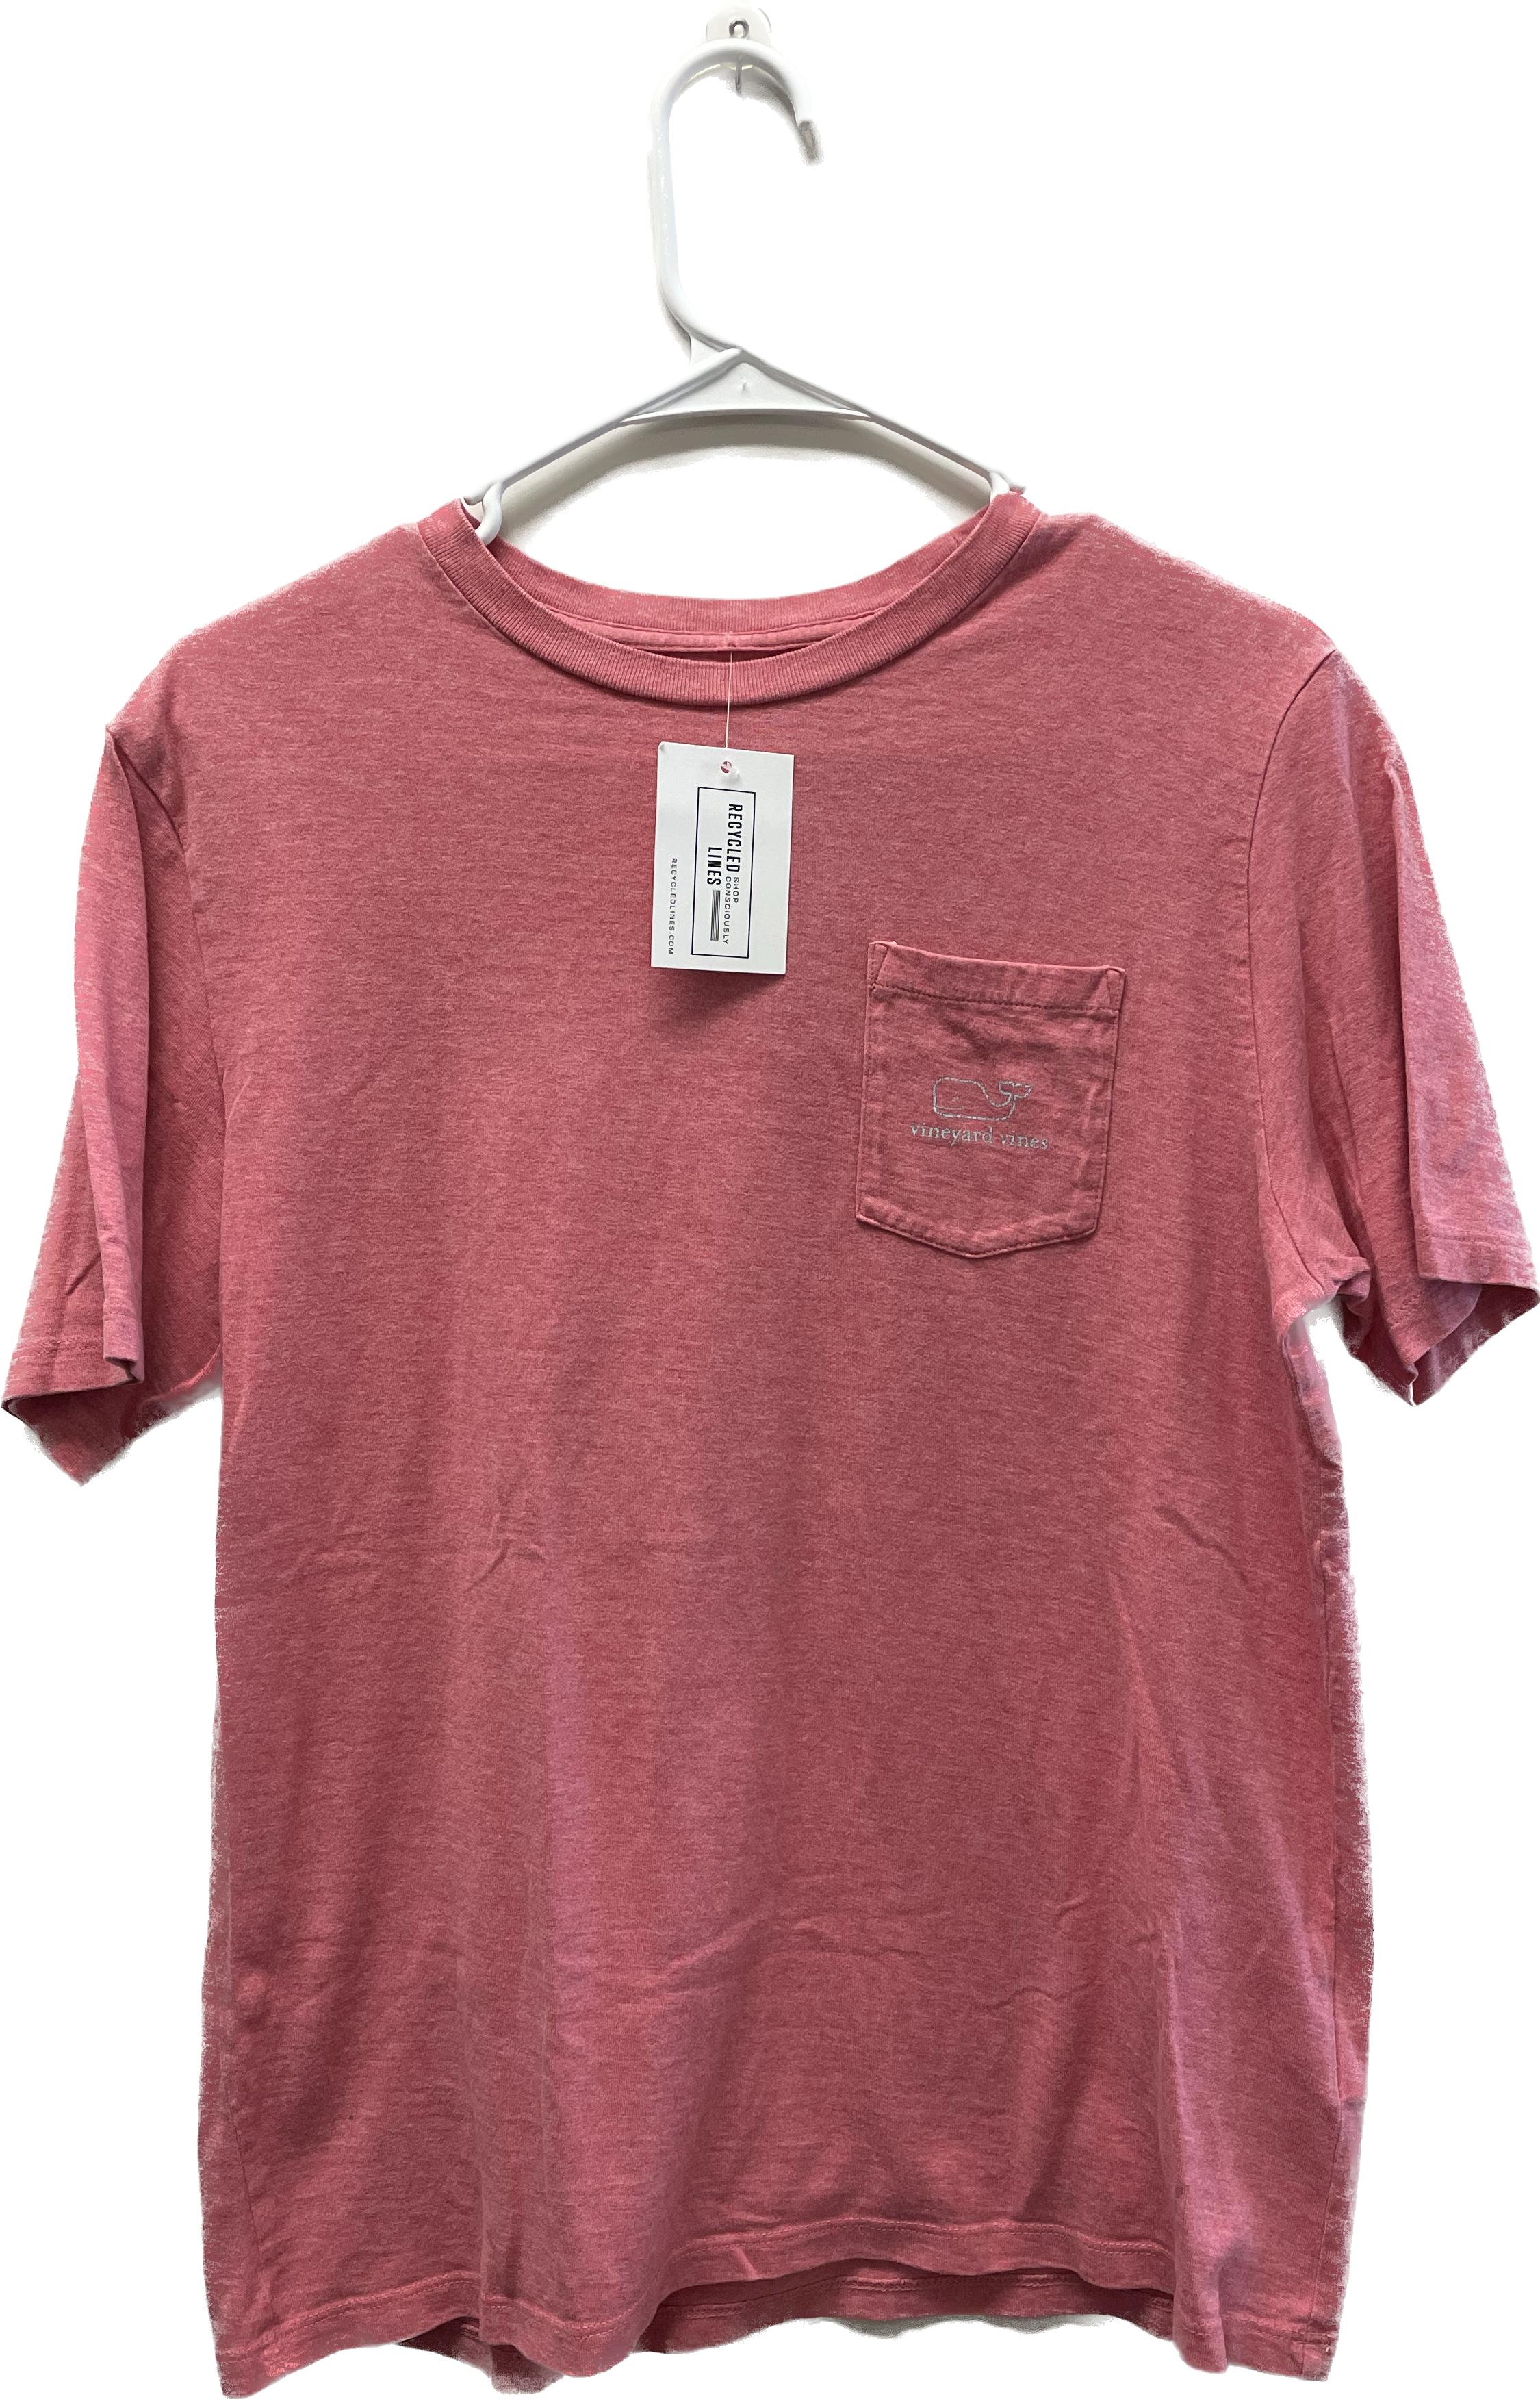 Vineyard Vines Tee Shirt, Coral Boys Size XL (18)